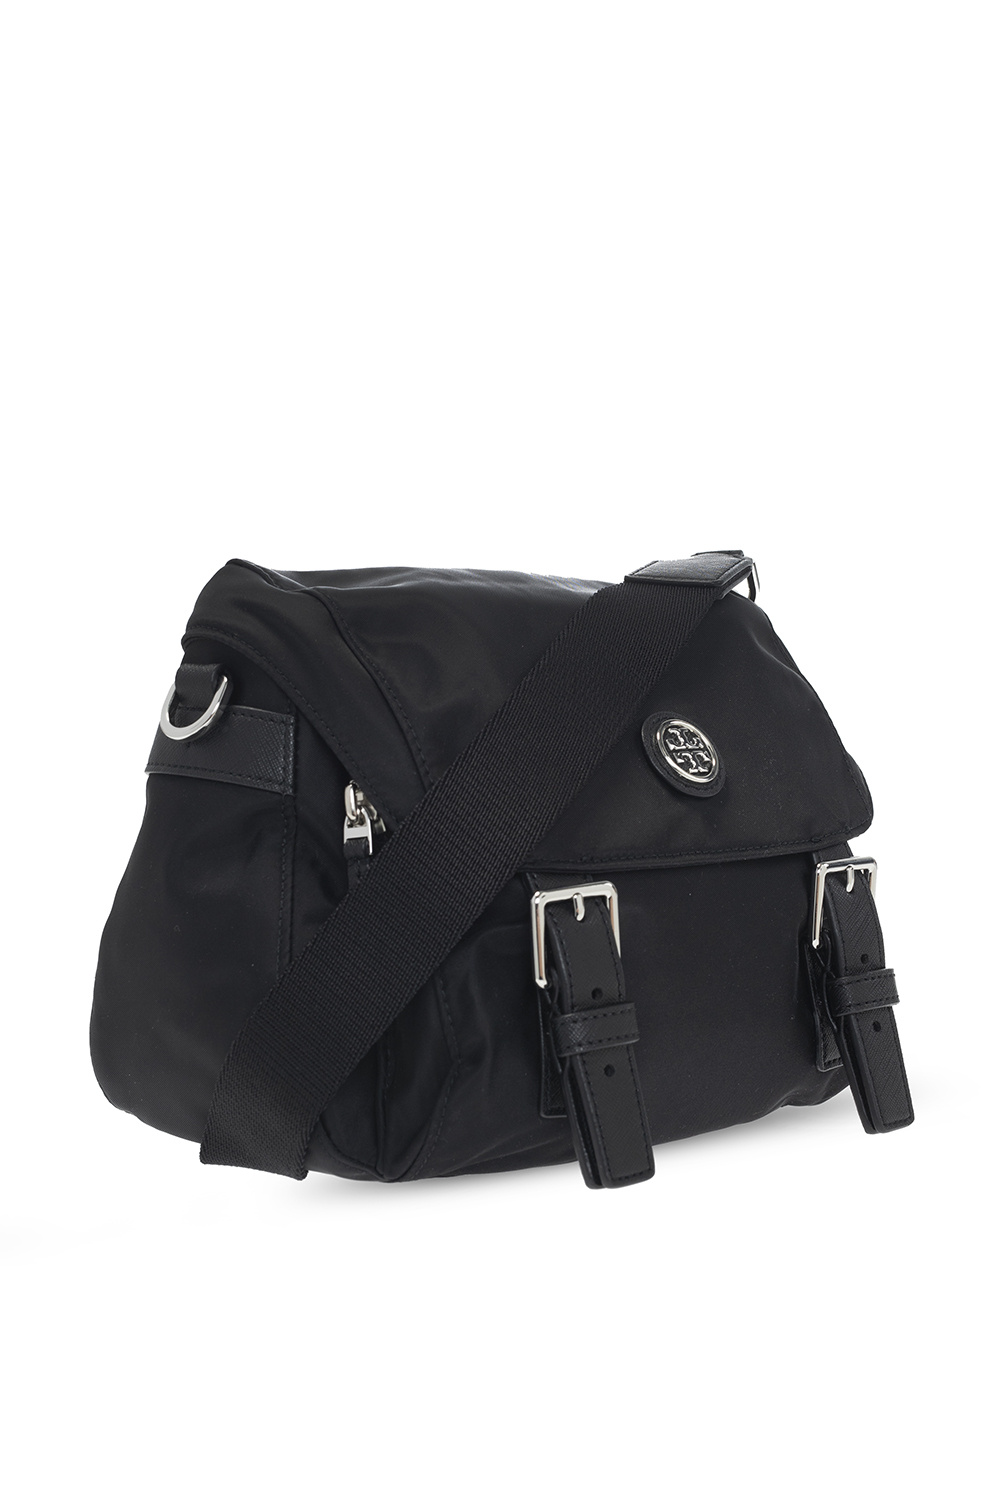 Black 'Mercer Small' shoulder bag Tory Burch - Vitkac TW